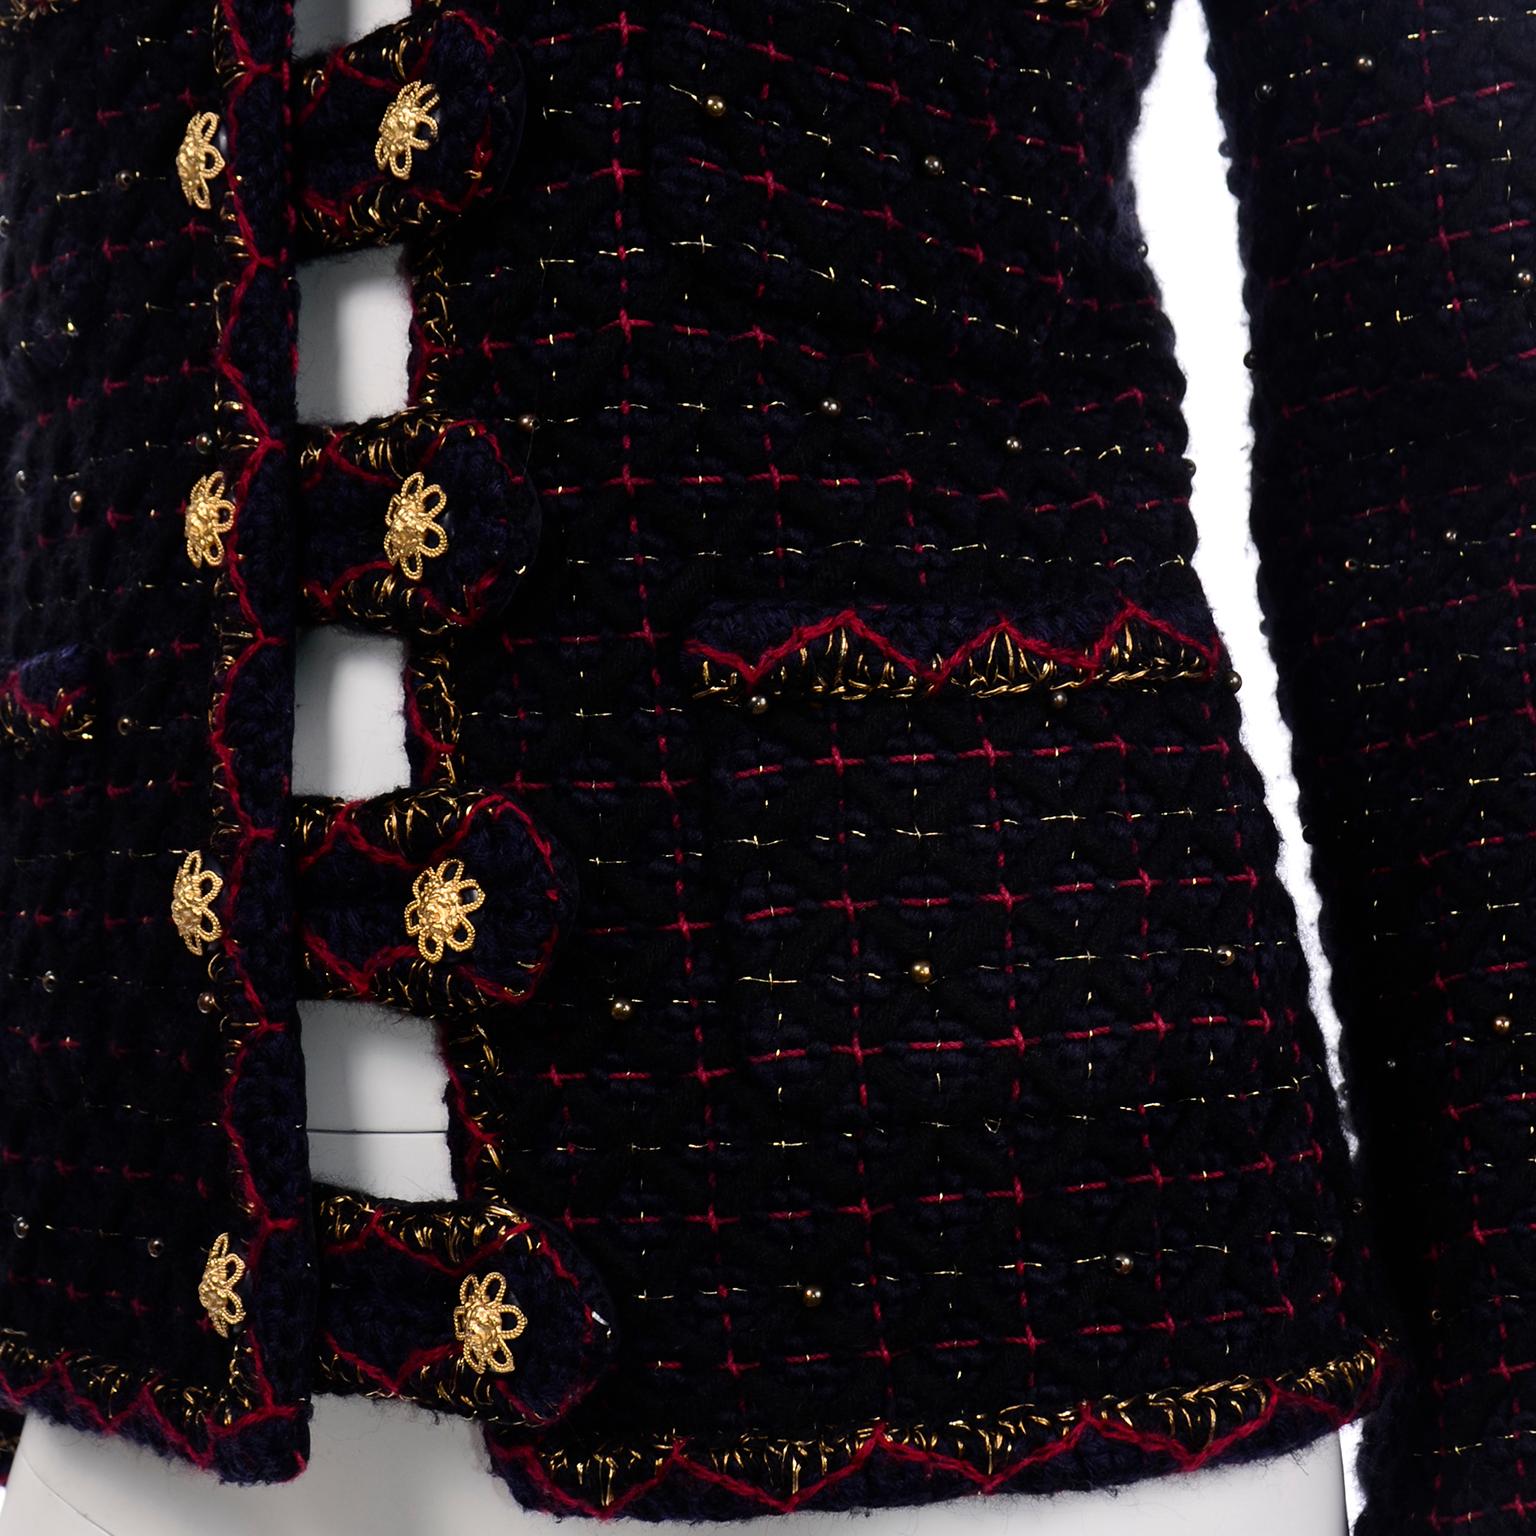 Chanel 2015 Paris Salzburg Collection $14250 Tweed Documented Runway Jacket 5